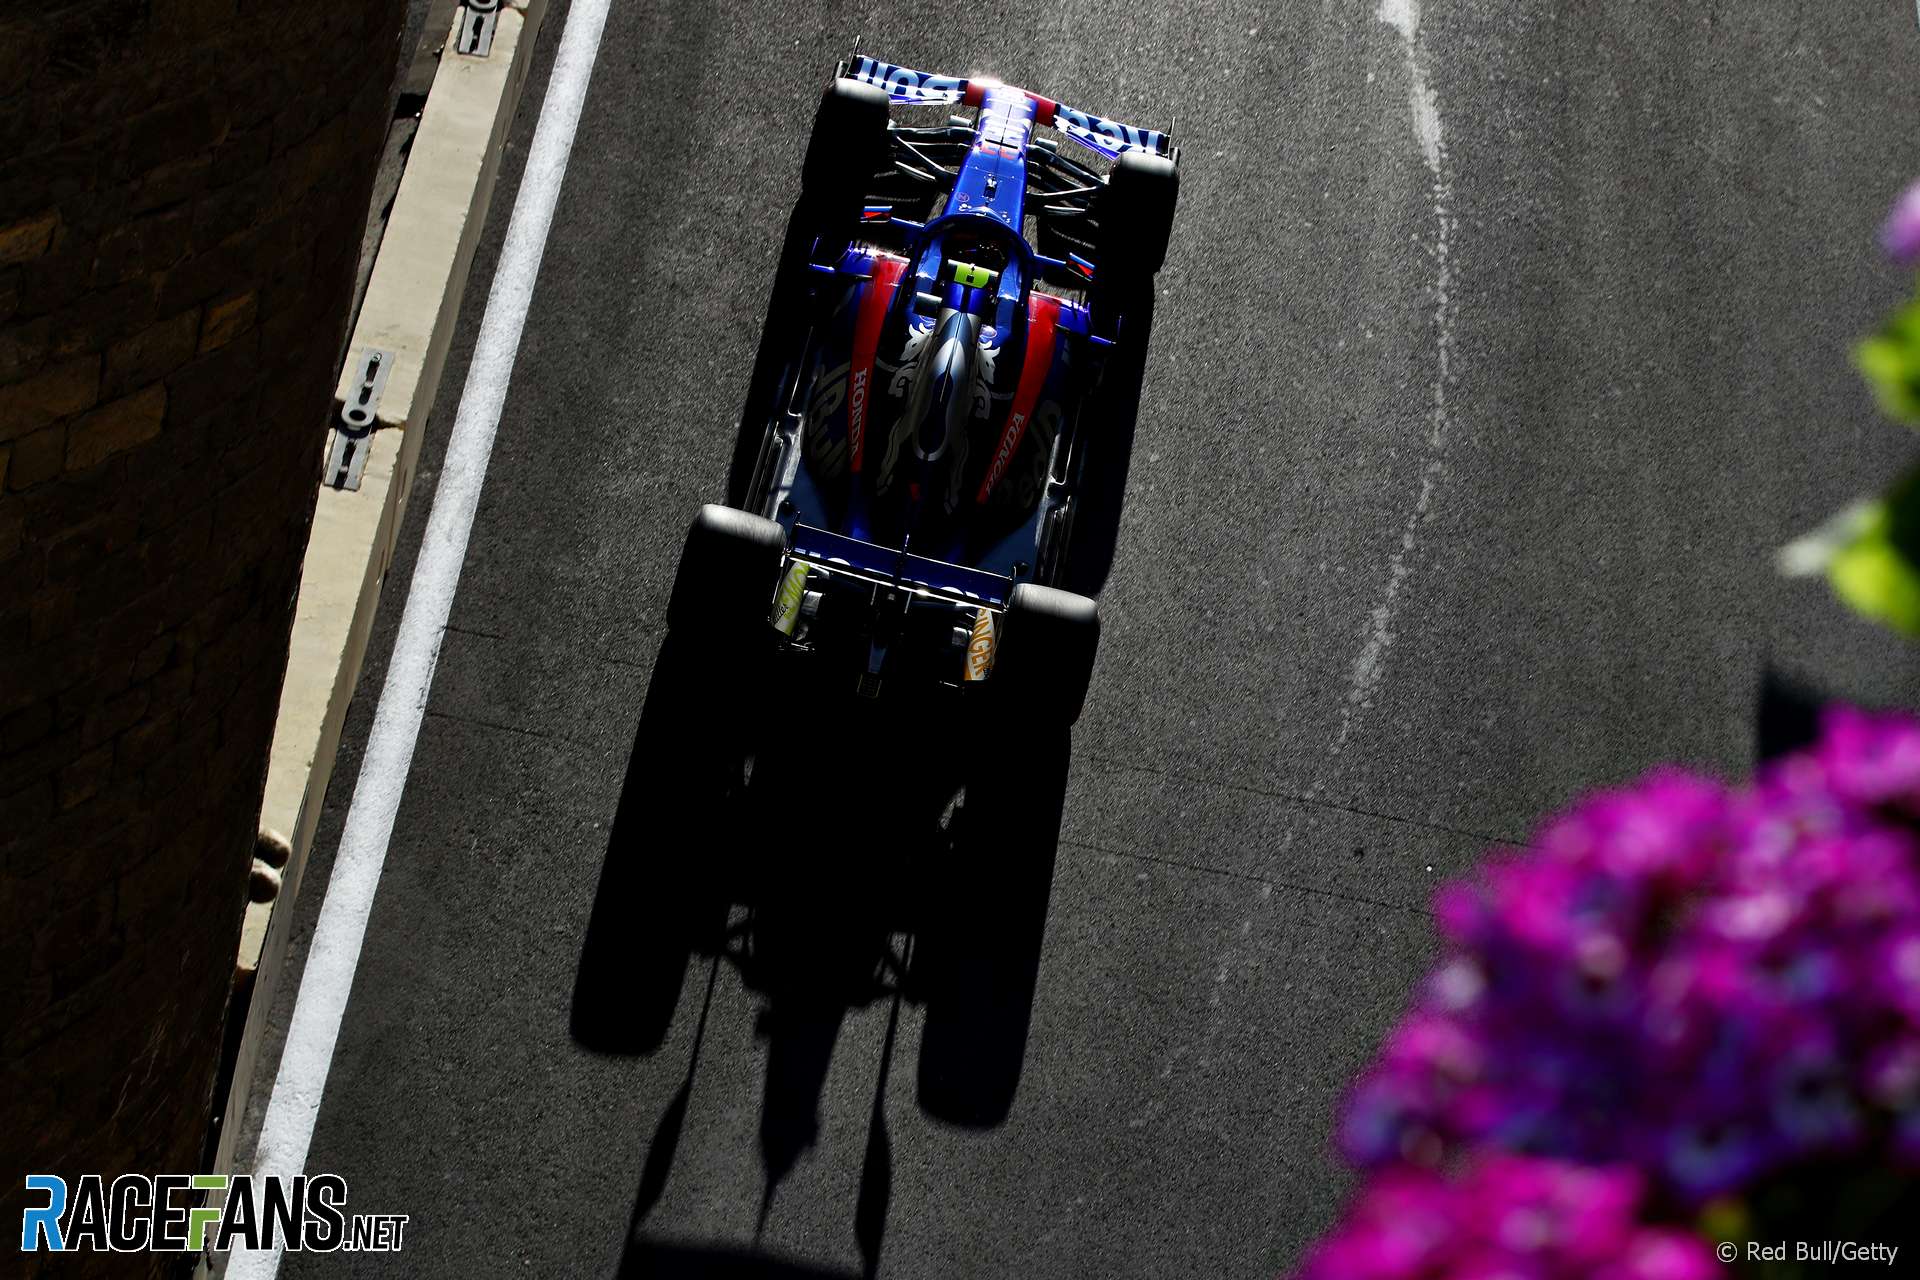 Alexander Albon, Toro Rosso, Baku City Circuit, 2019